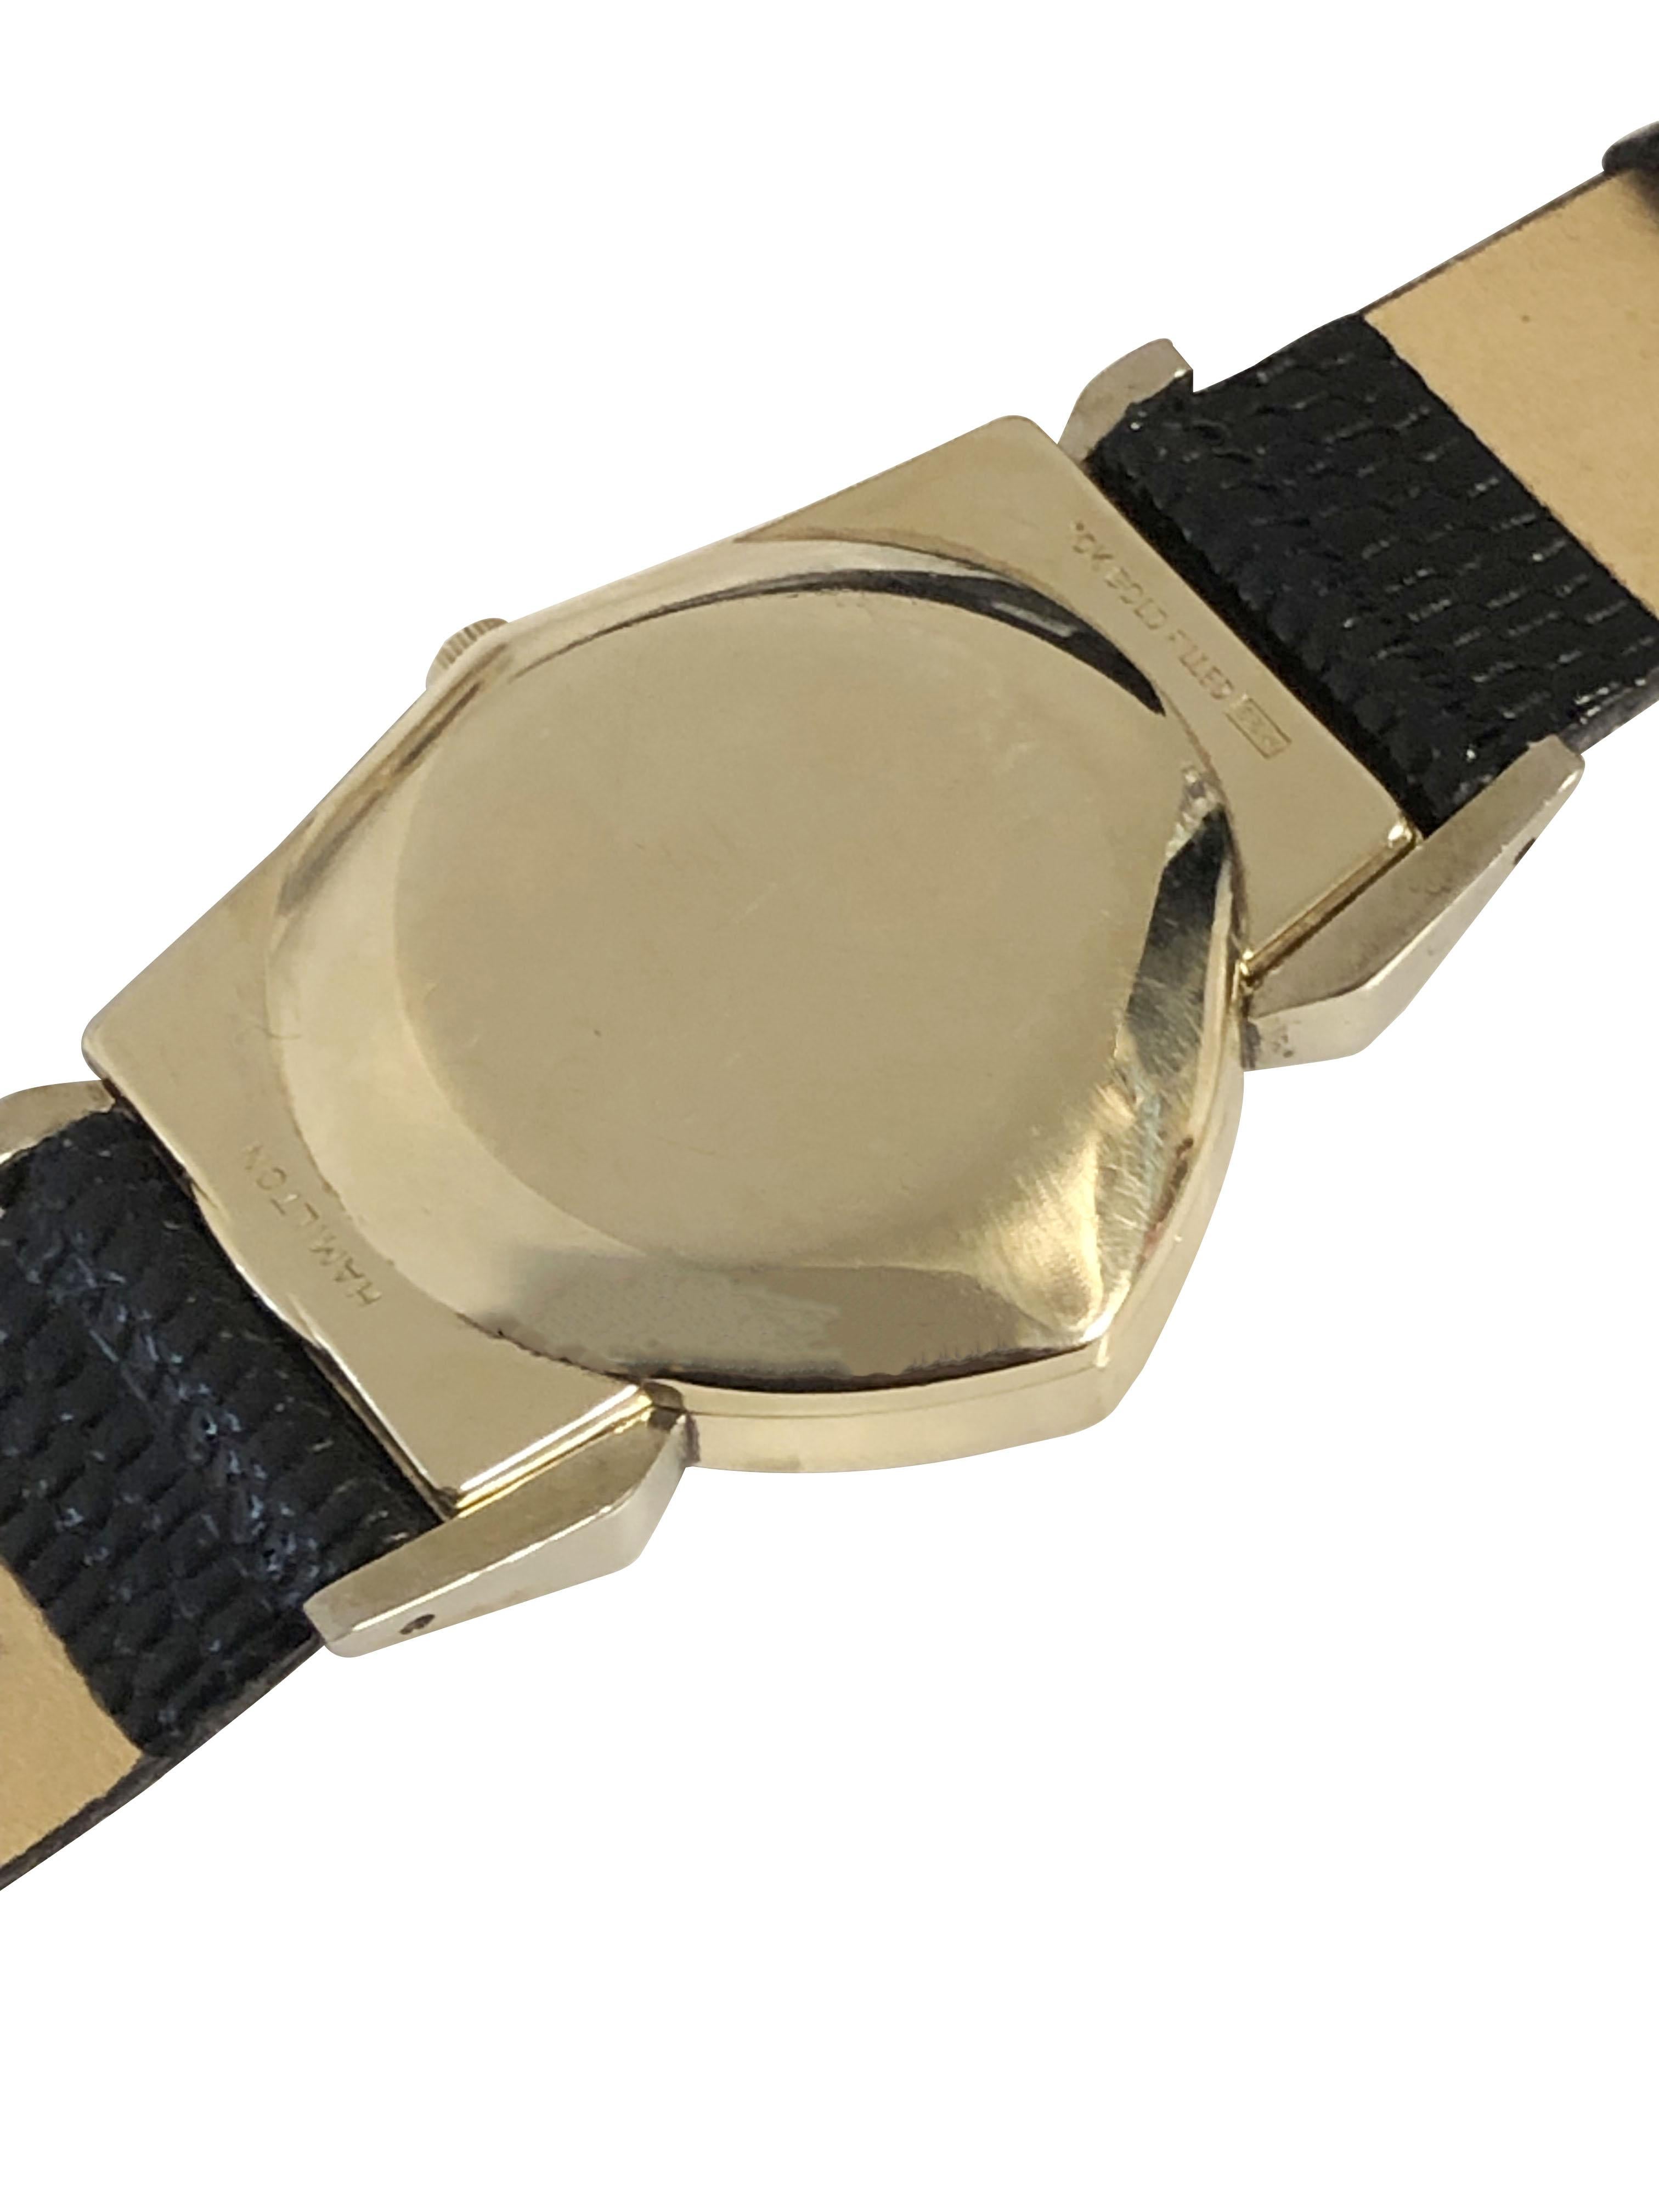 Modernist Hamilton Vintage Pacer Electric Wrist Watch For Sale